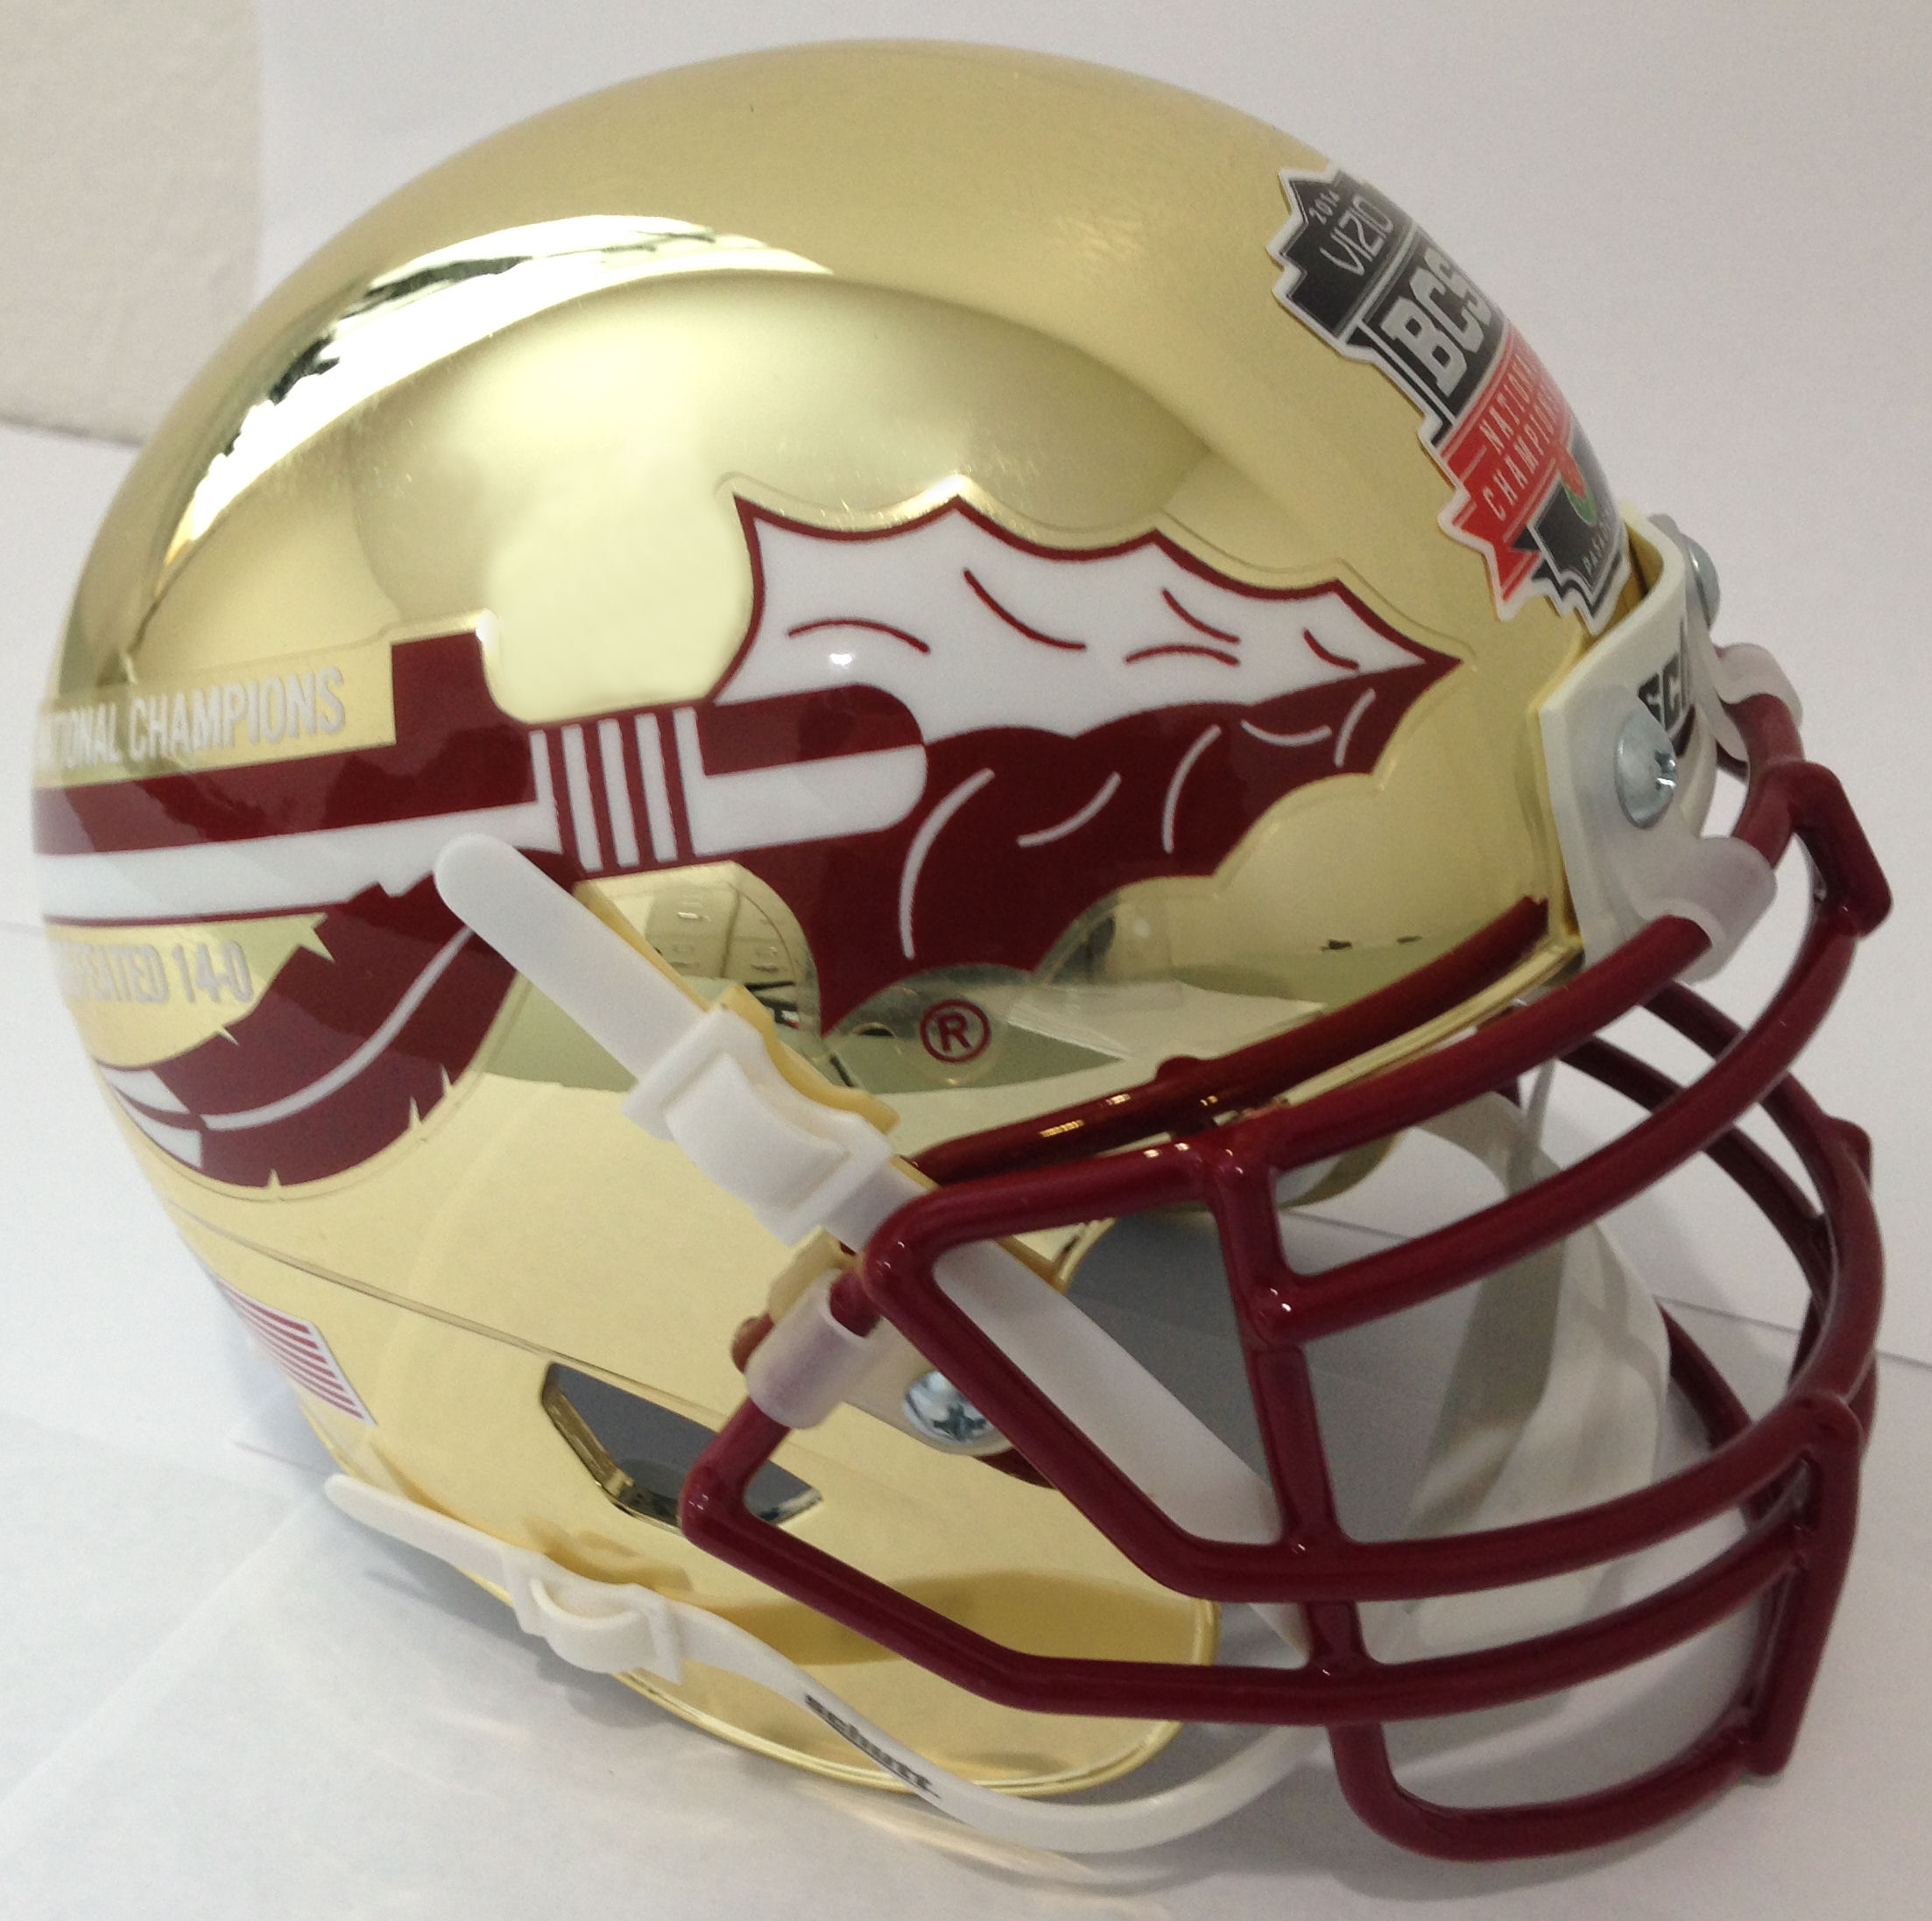 Florida State Seminoles 2014 BCS National Champions Mini XP Authentic Helmet Schutt <B>Gold Chrome</B>